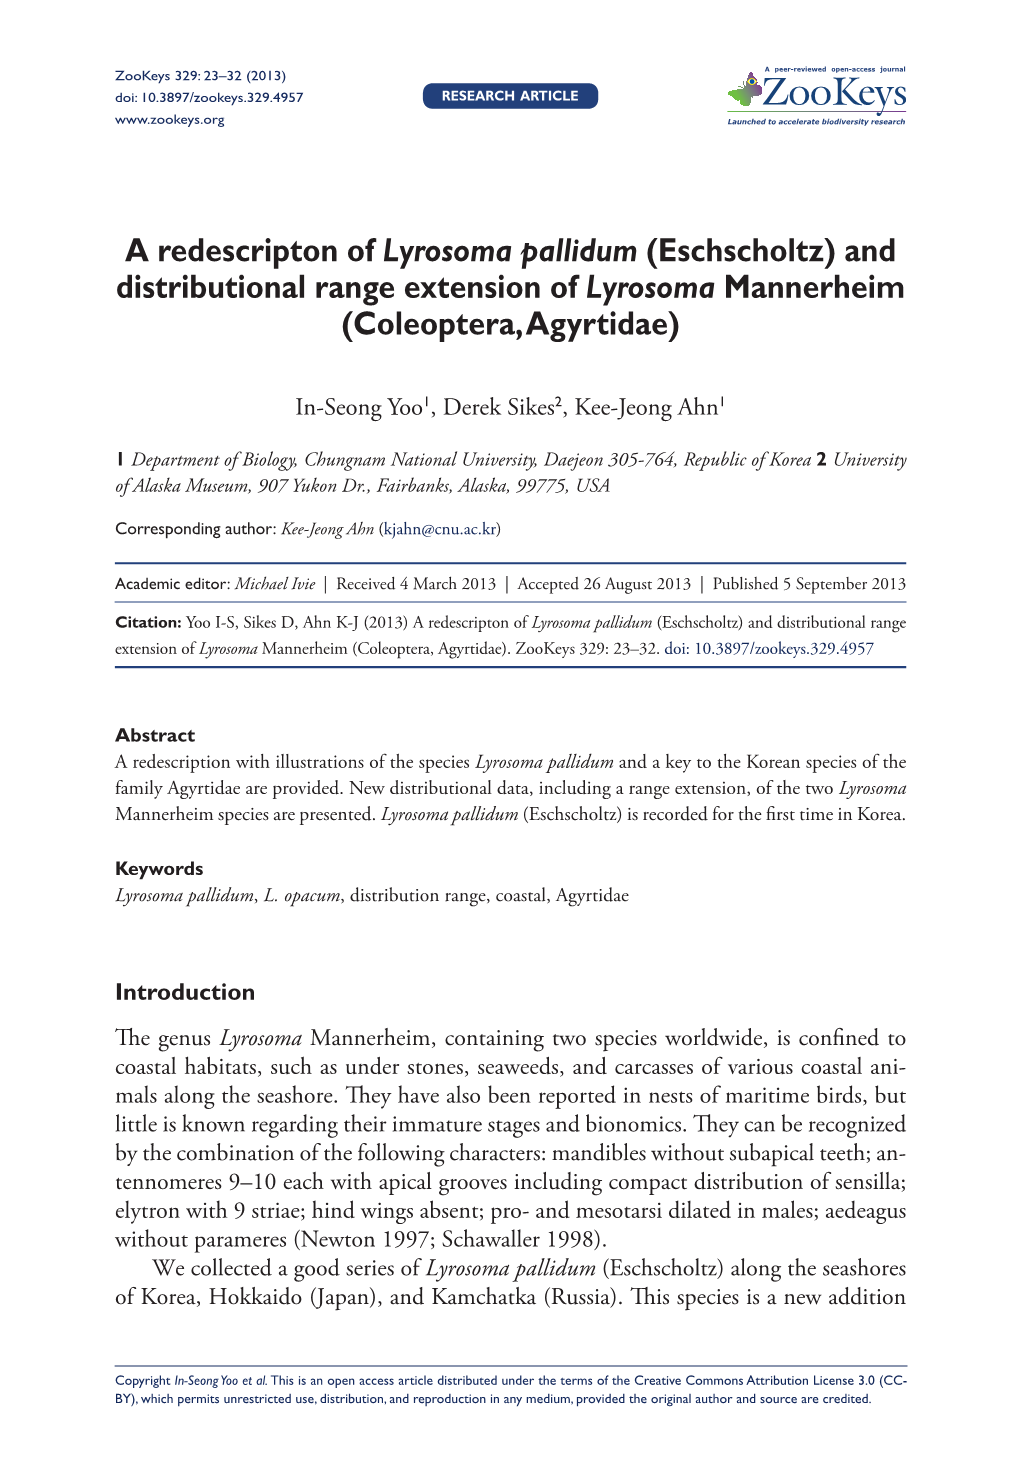 A Redescripton of Lyrosoma Pallidum (Eschscholtz) and Distributional Range Extension of Lyrosoma Mannerheim (Coleoptera, Agyrtidae)